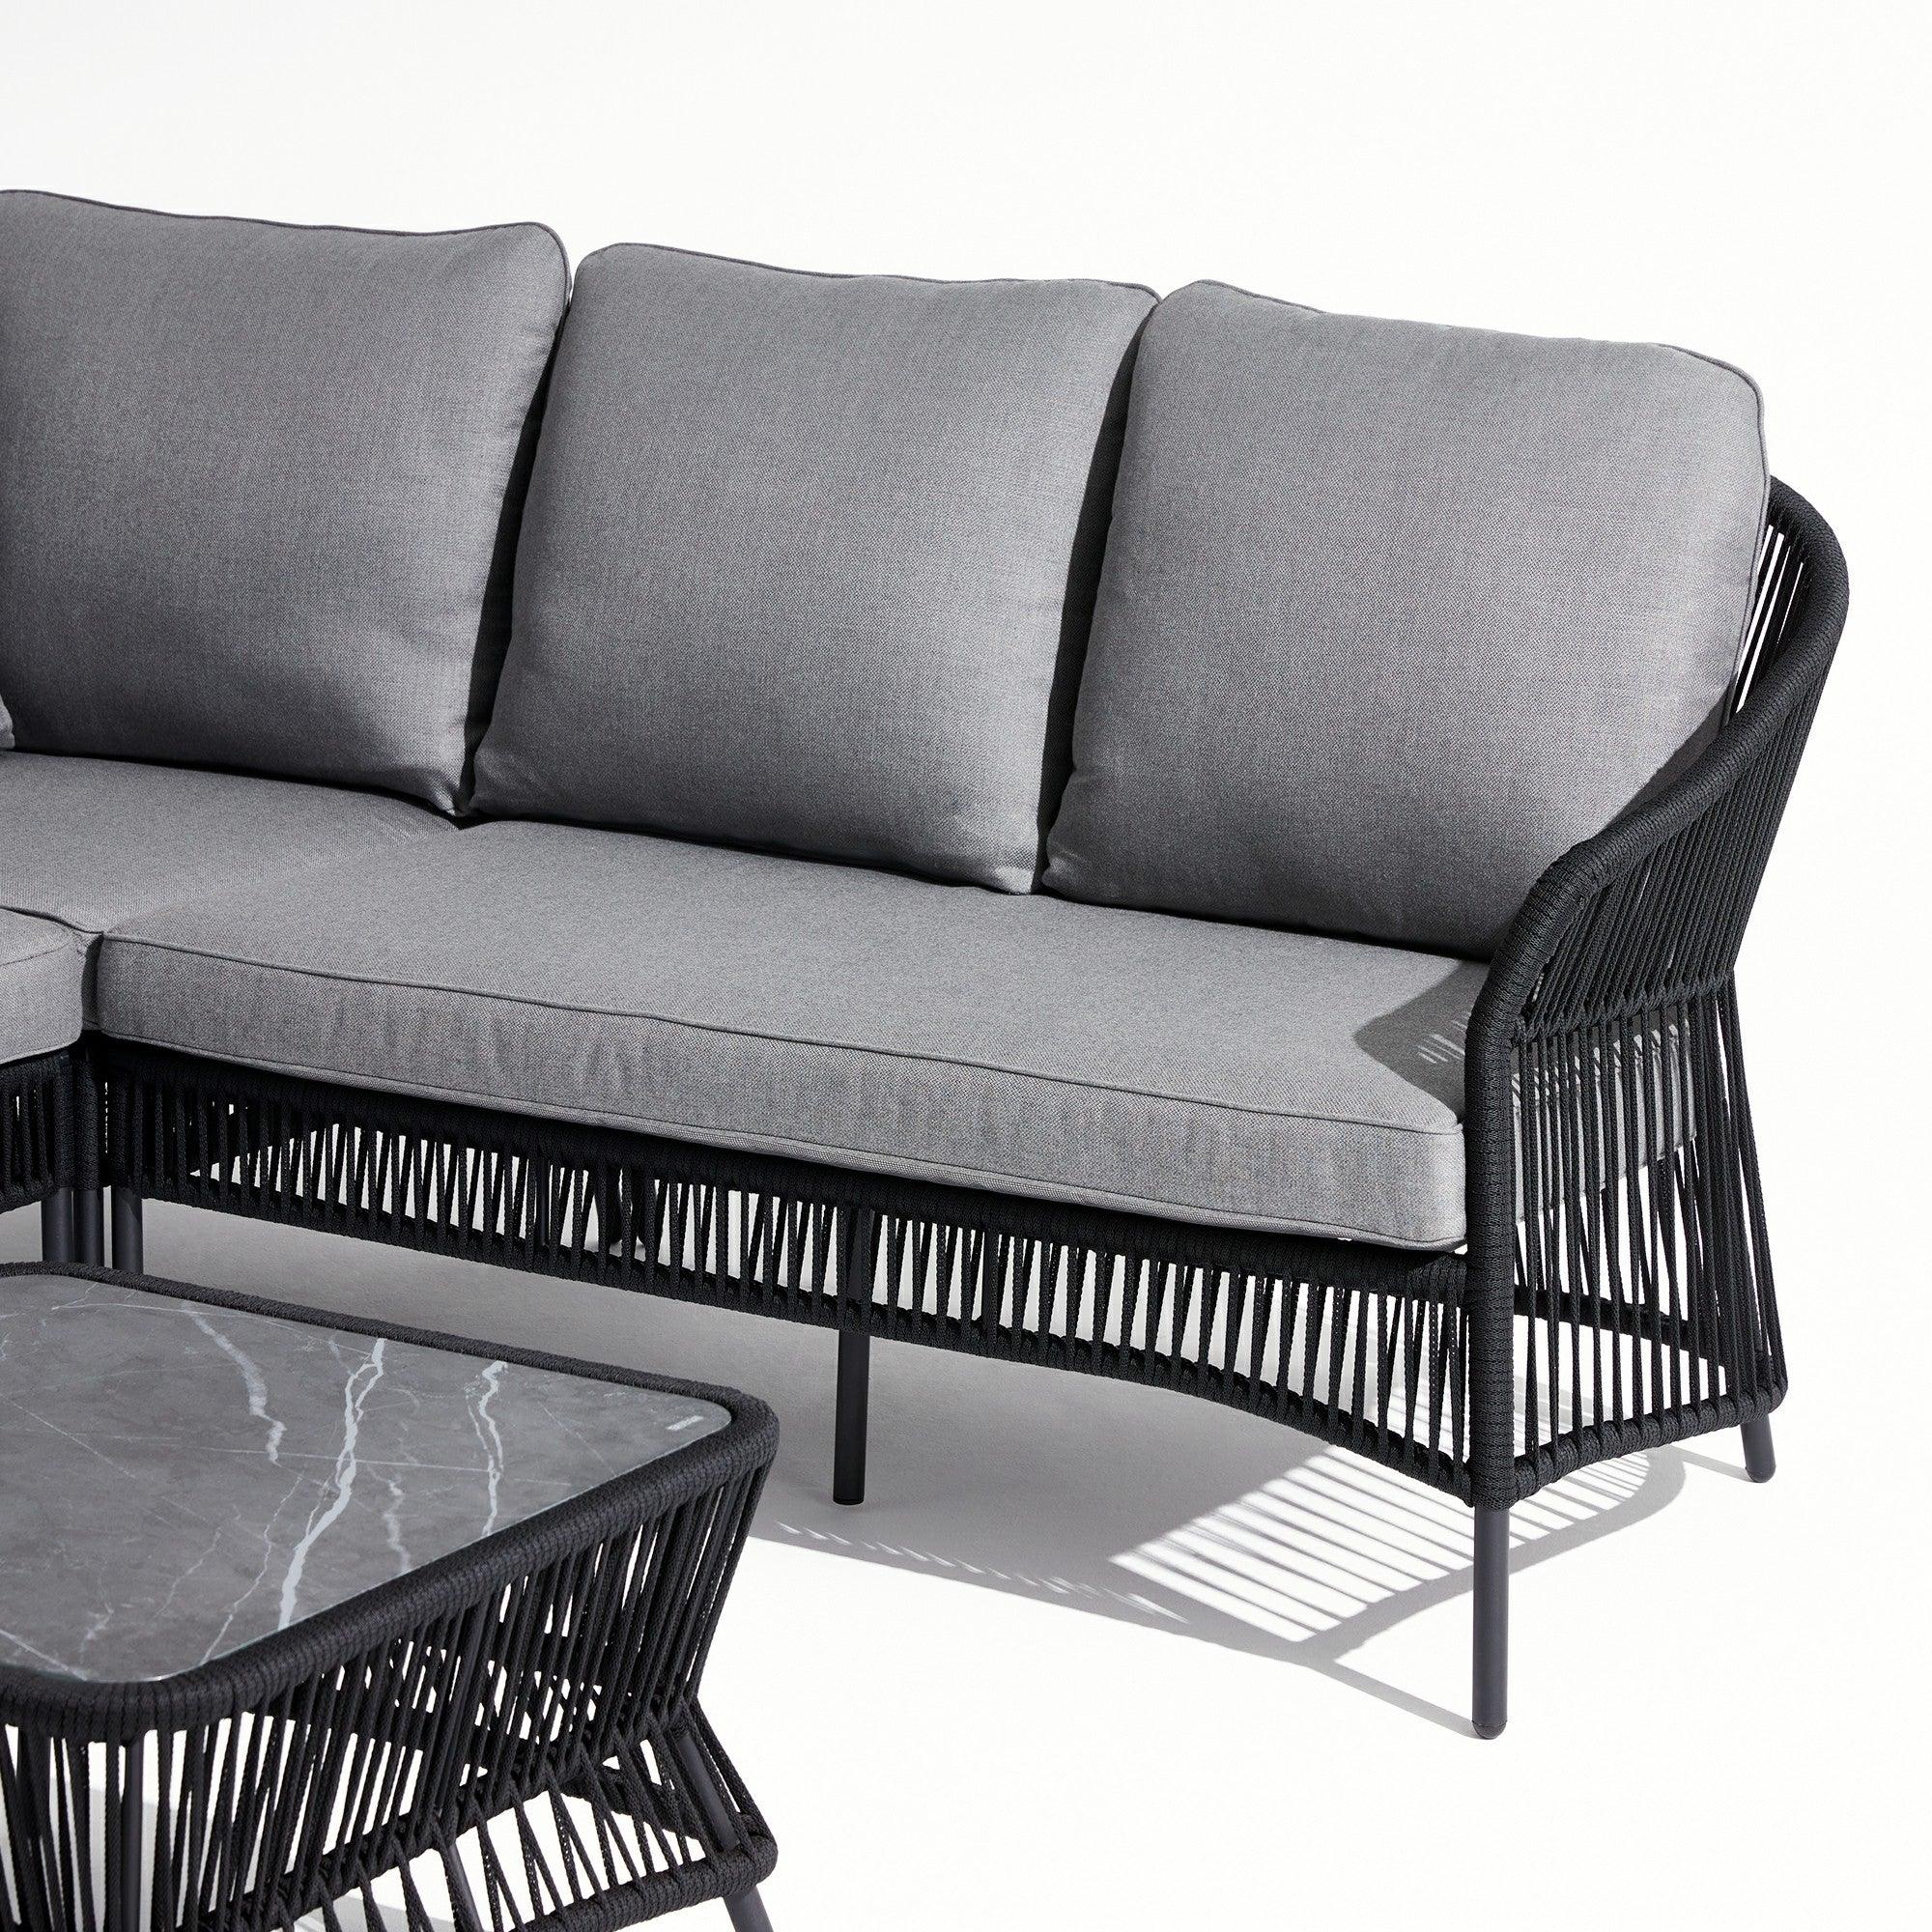 Wonder- Sofa & Table, 3-seater sofa, coffee table, aluminum & rope design, grey finish,delicated rope design,sintered stone table top- Sunsitt Signature 